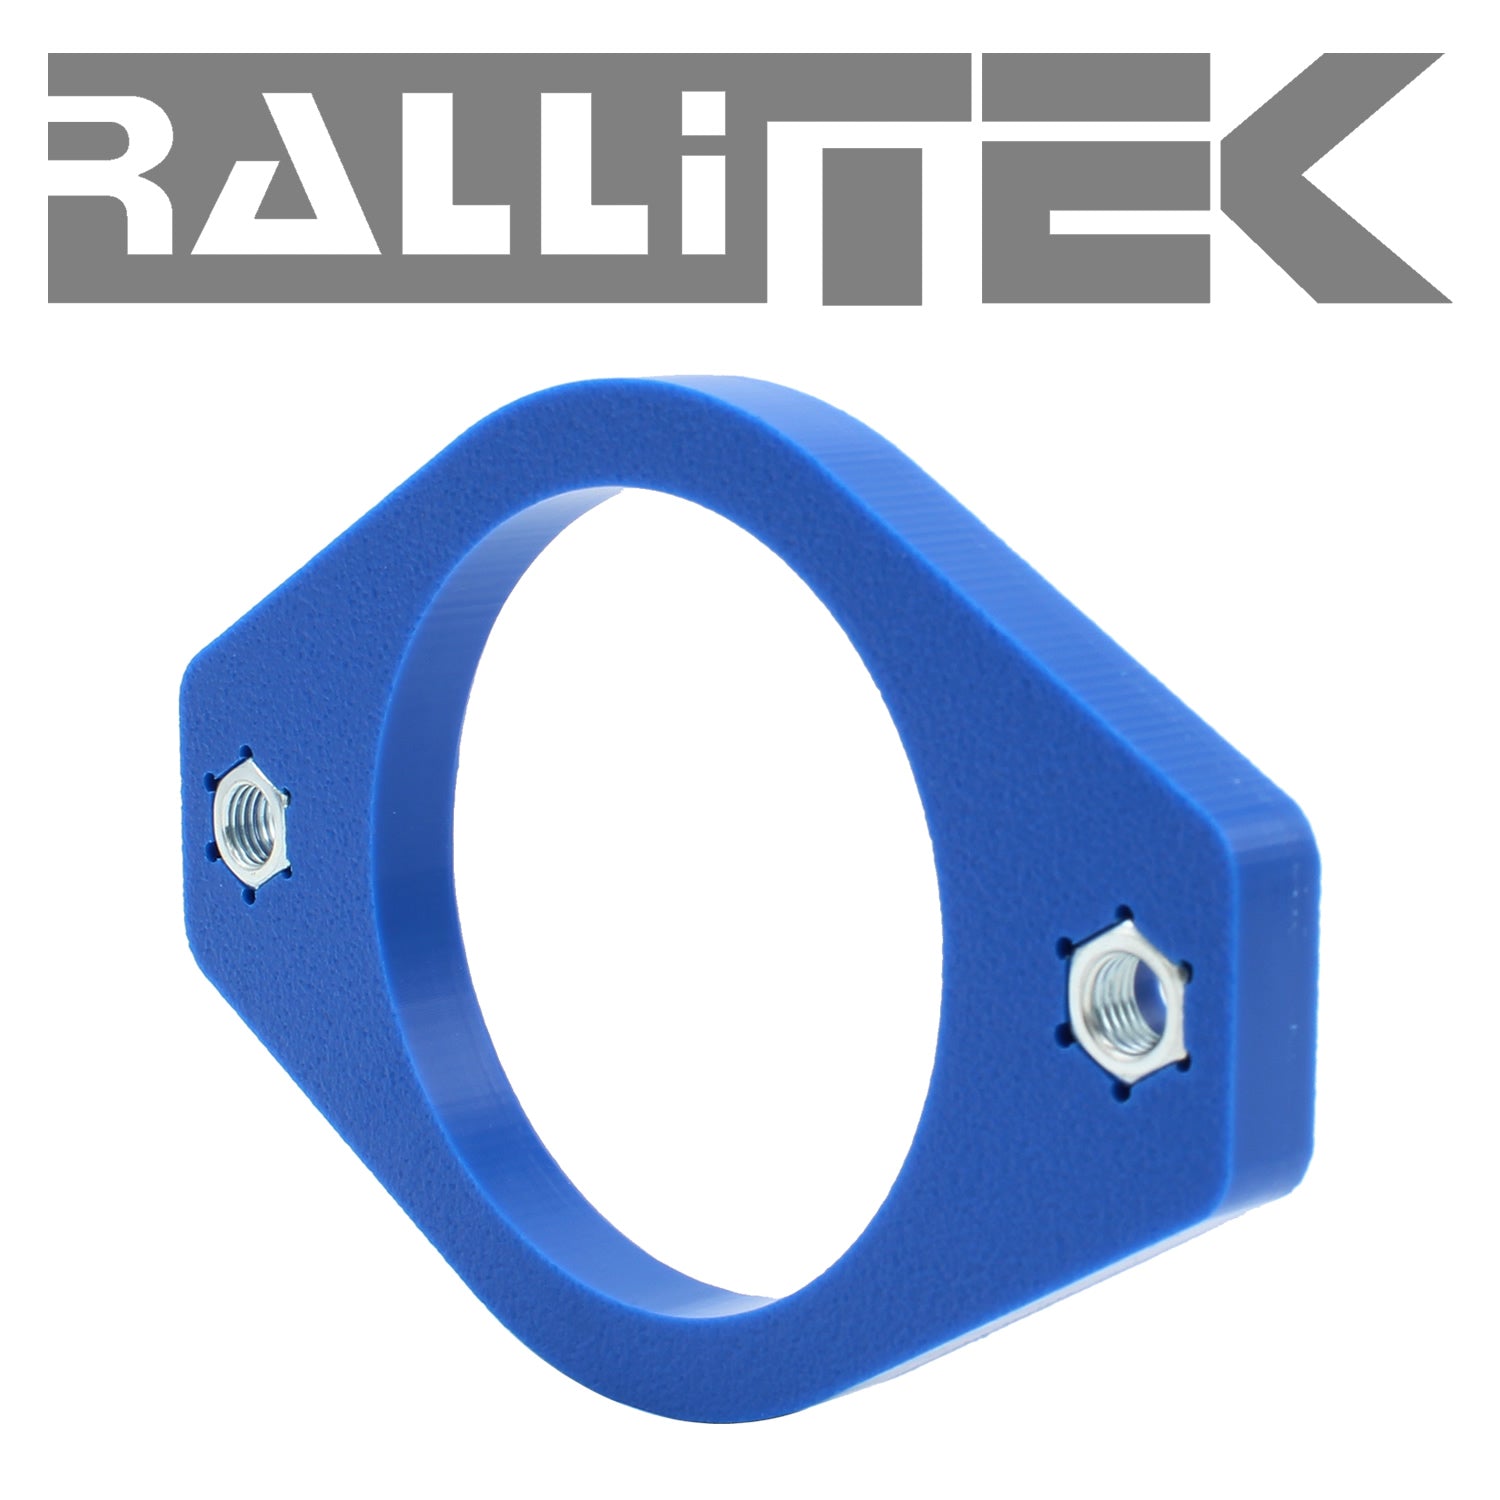 RalliTEK 0.5" Rear Lift Kit Spacers - All Impreza 2008-2019 / BRZ 2013-2017 / FR-S 2013-2016 / Outback 2010-2019 / More